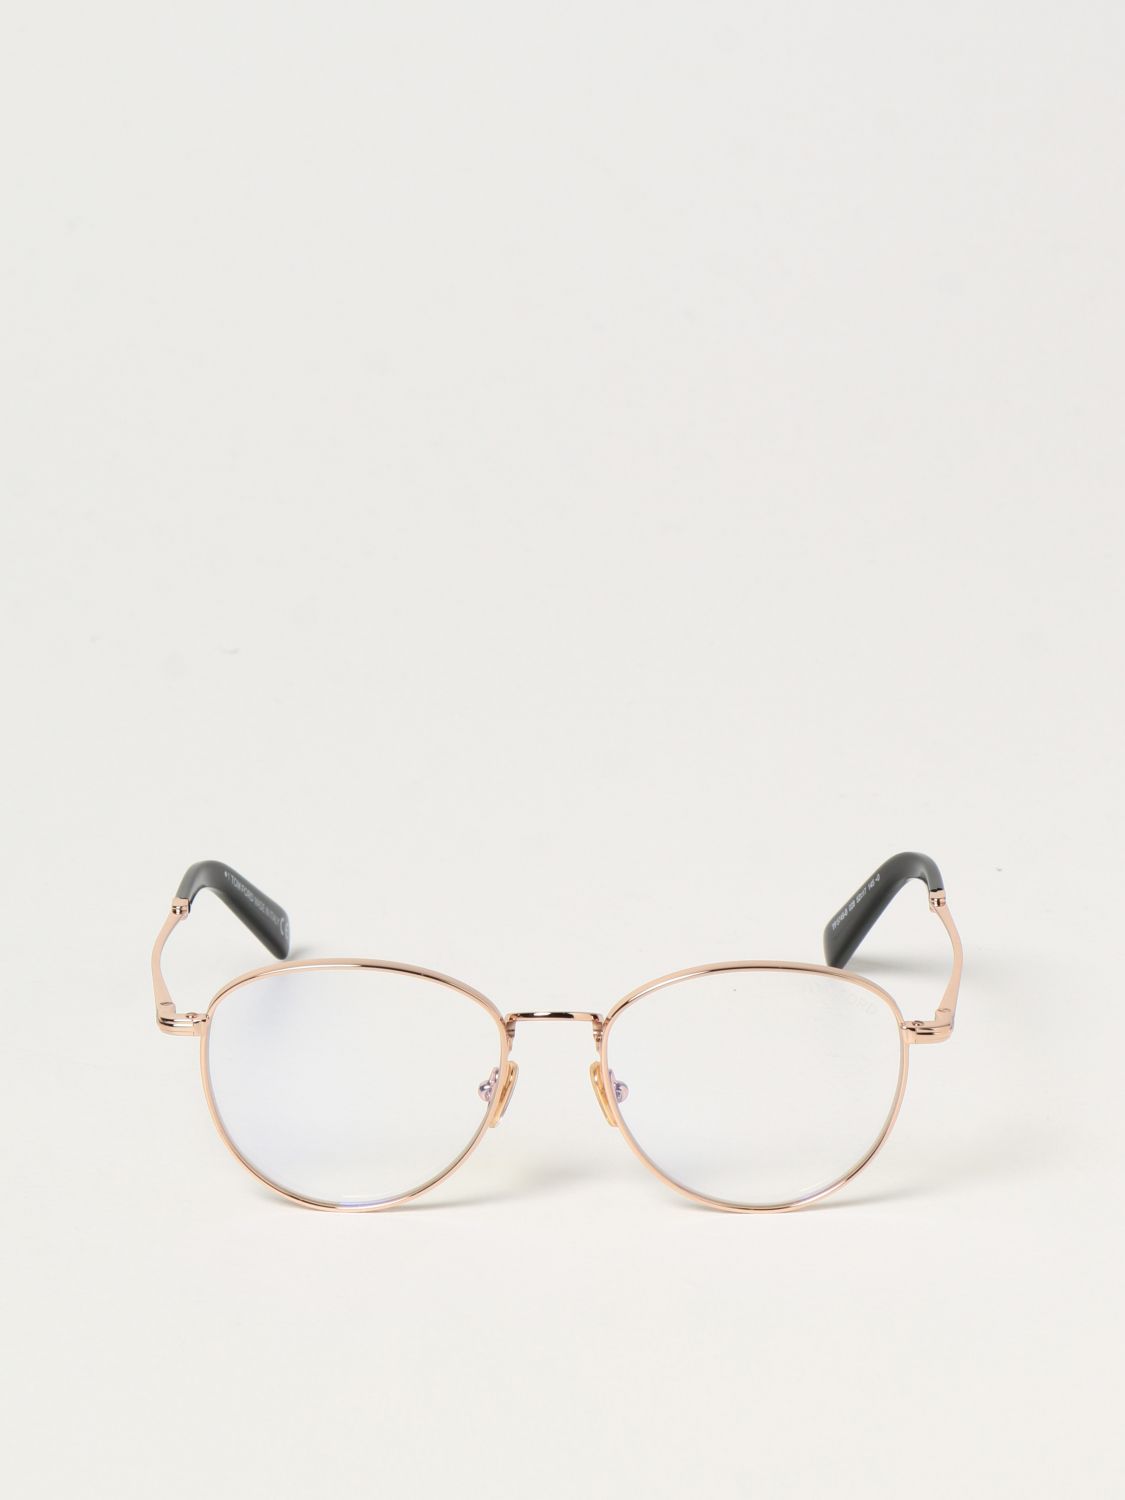 Glasses Tom Ford: Tom Ford metal eyeglasses gold 2